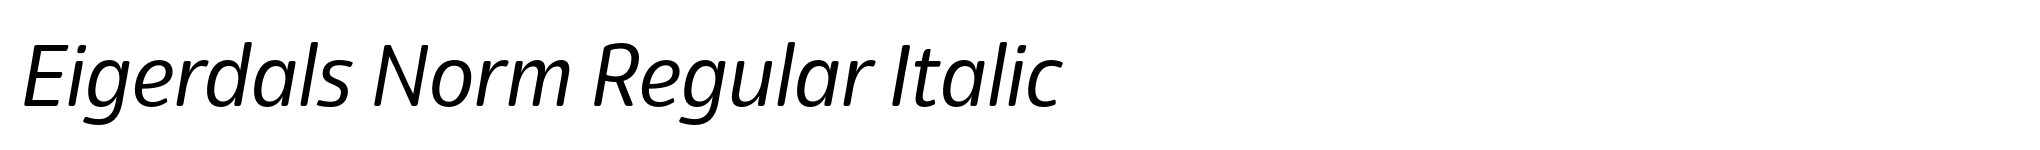 Eigerdals Norm Regular Italic image